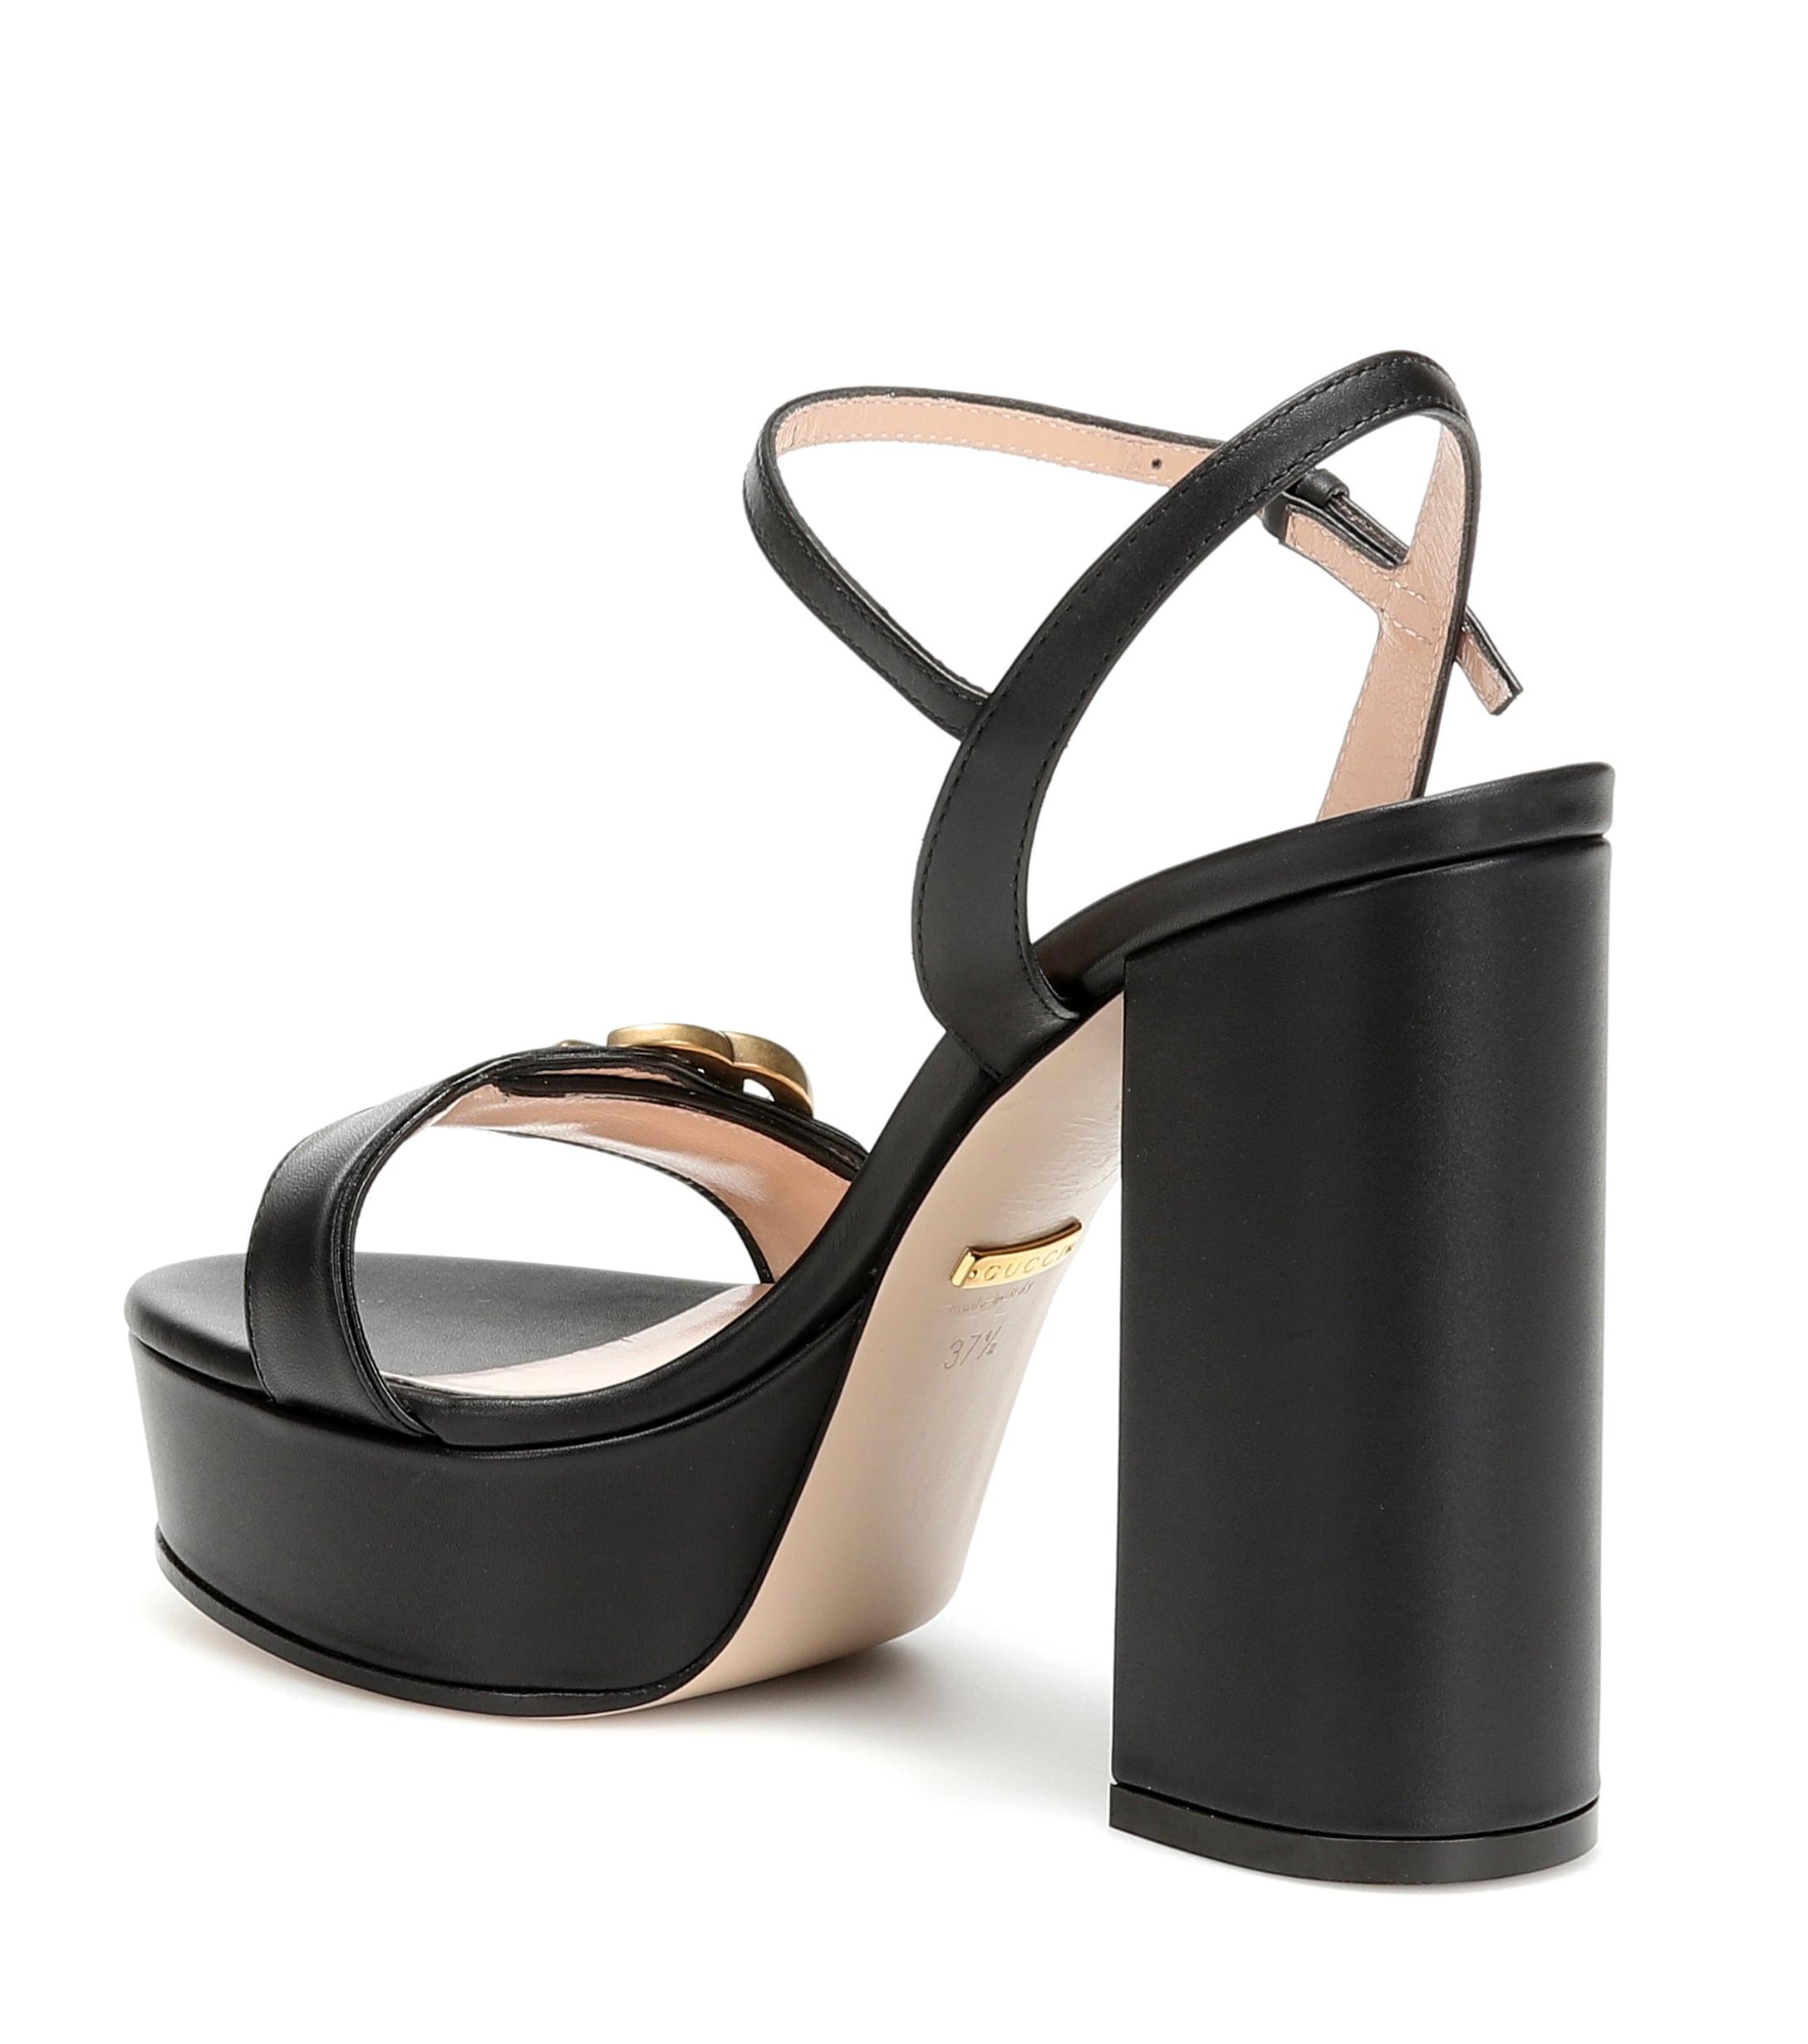 Gucci Marmont Platform Leather Sandals in Nero (Black) - Lyst